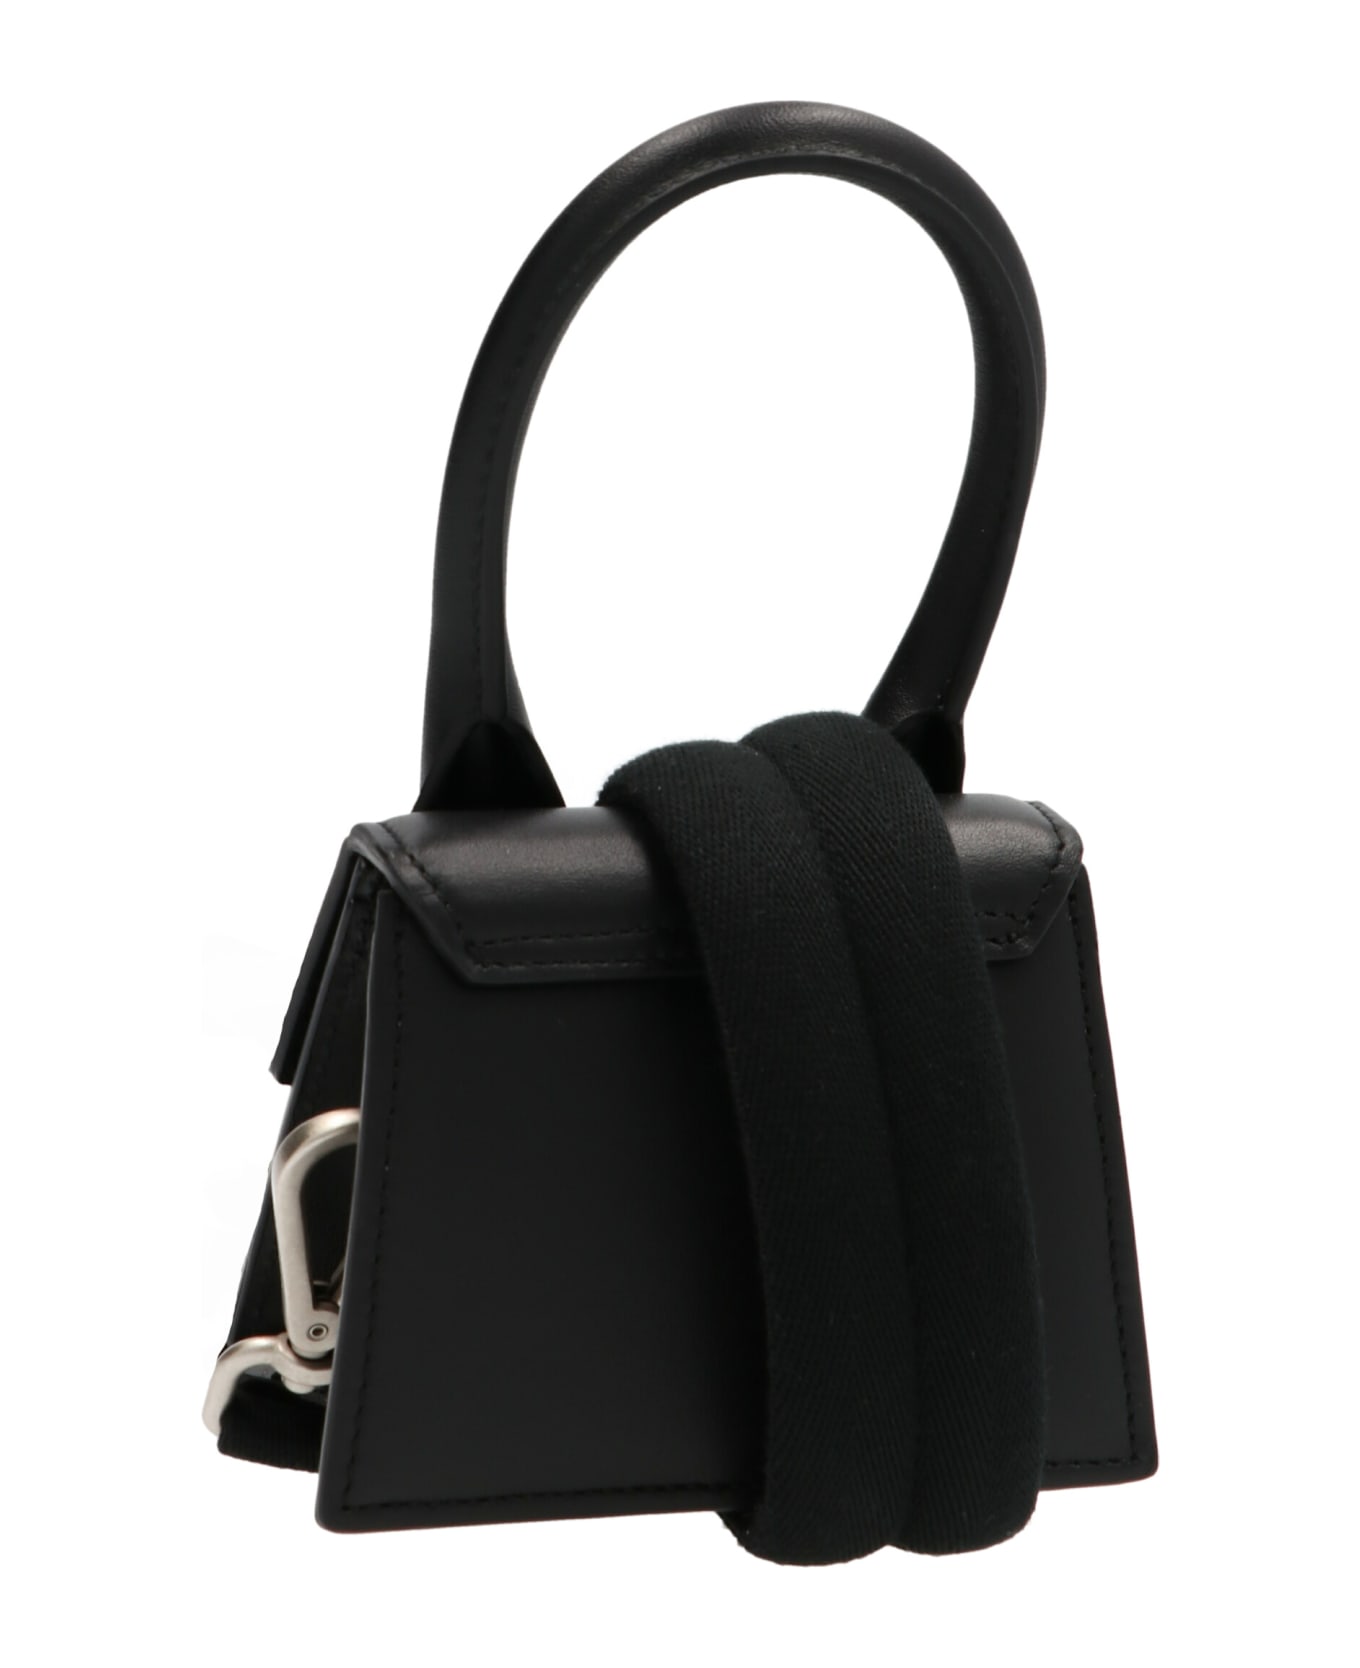 Jacquemus 'le Chiquito Homme' Mini Handbag - Black  